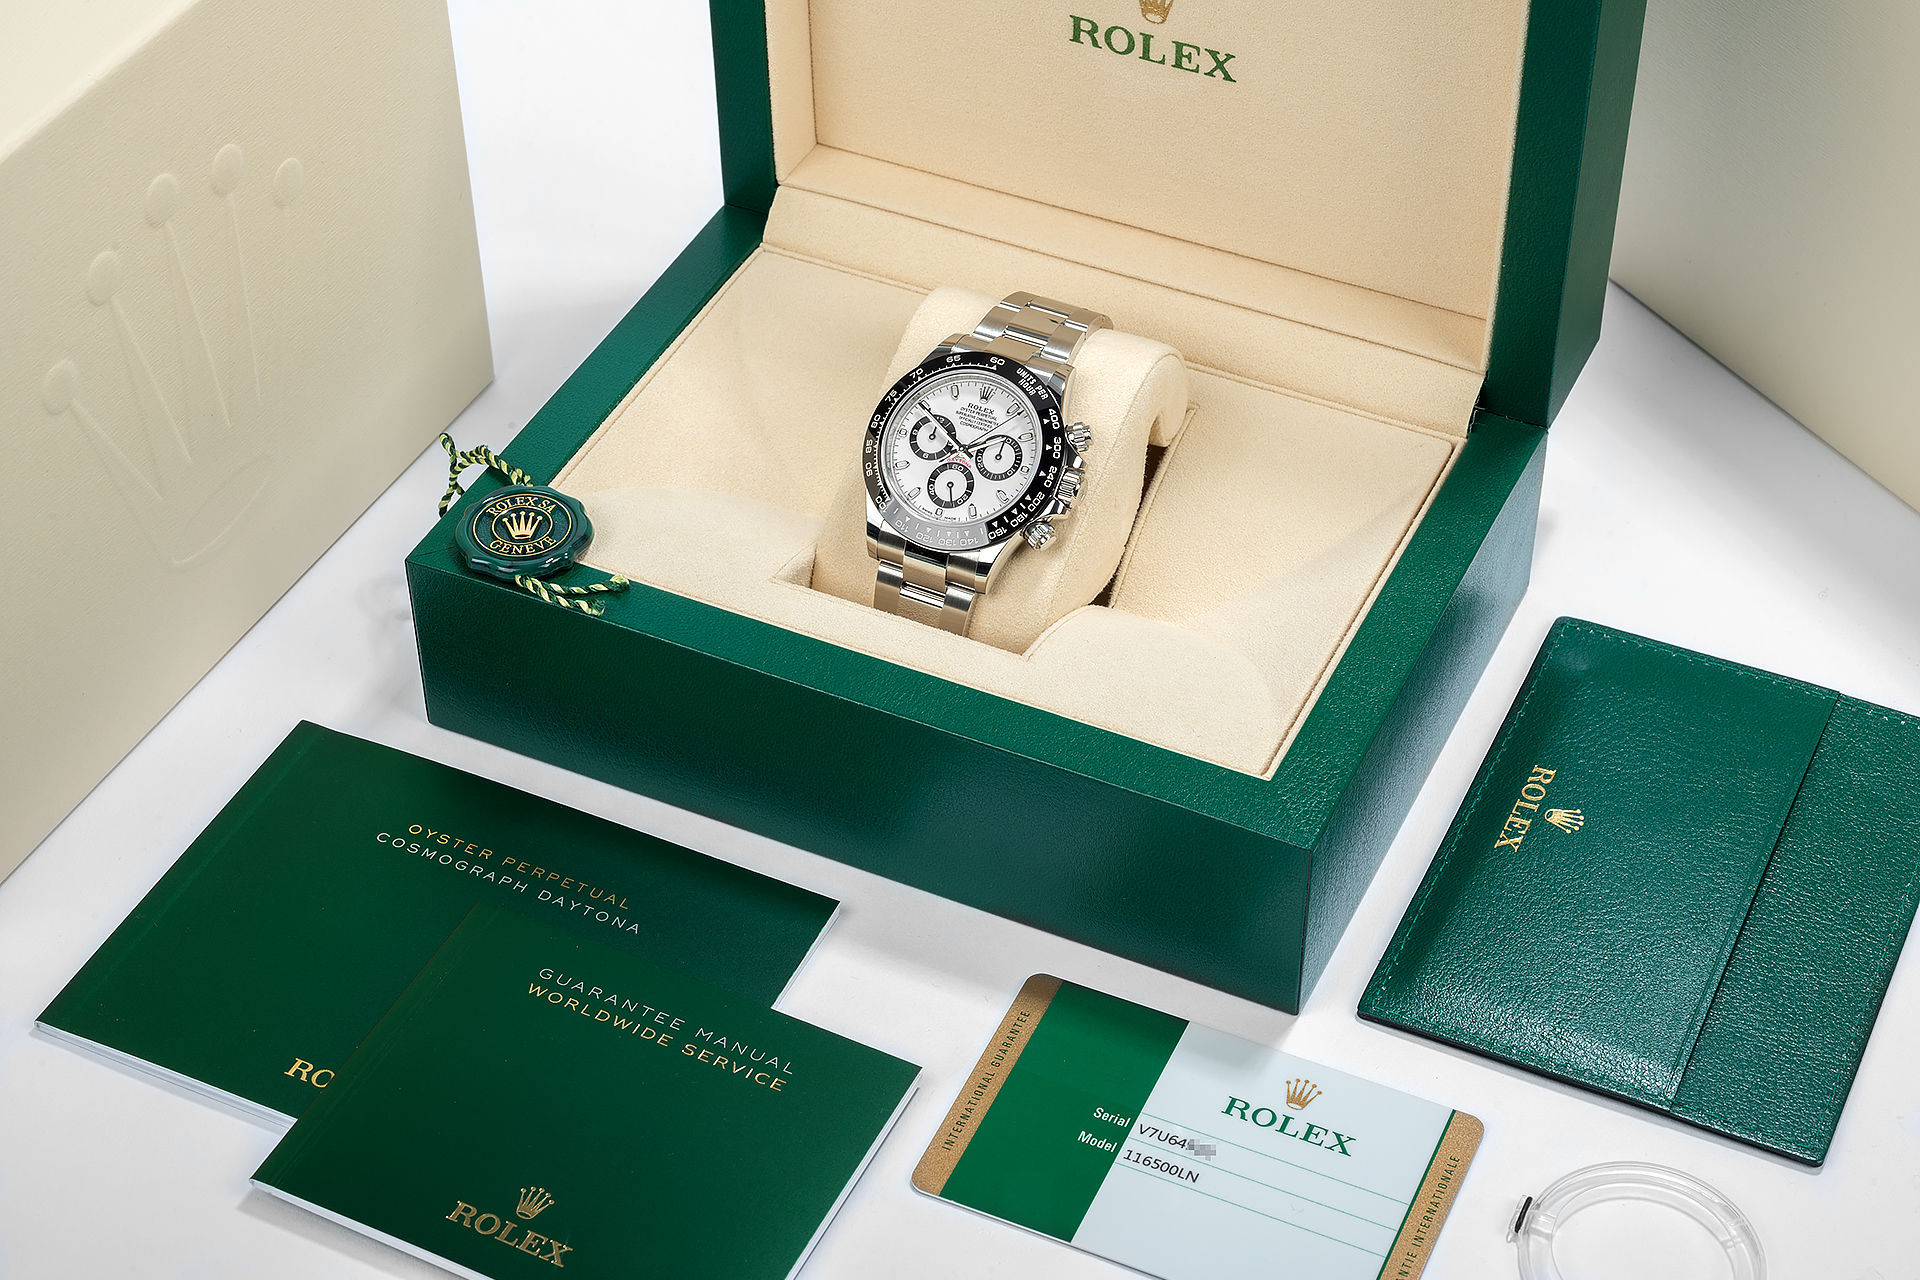 ref 116500LN | Brand New 5 Year Warranty | Rolex Cosmograph Daytona